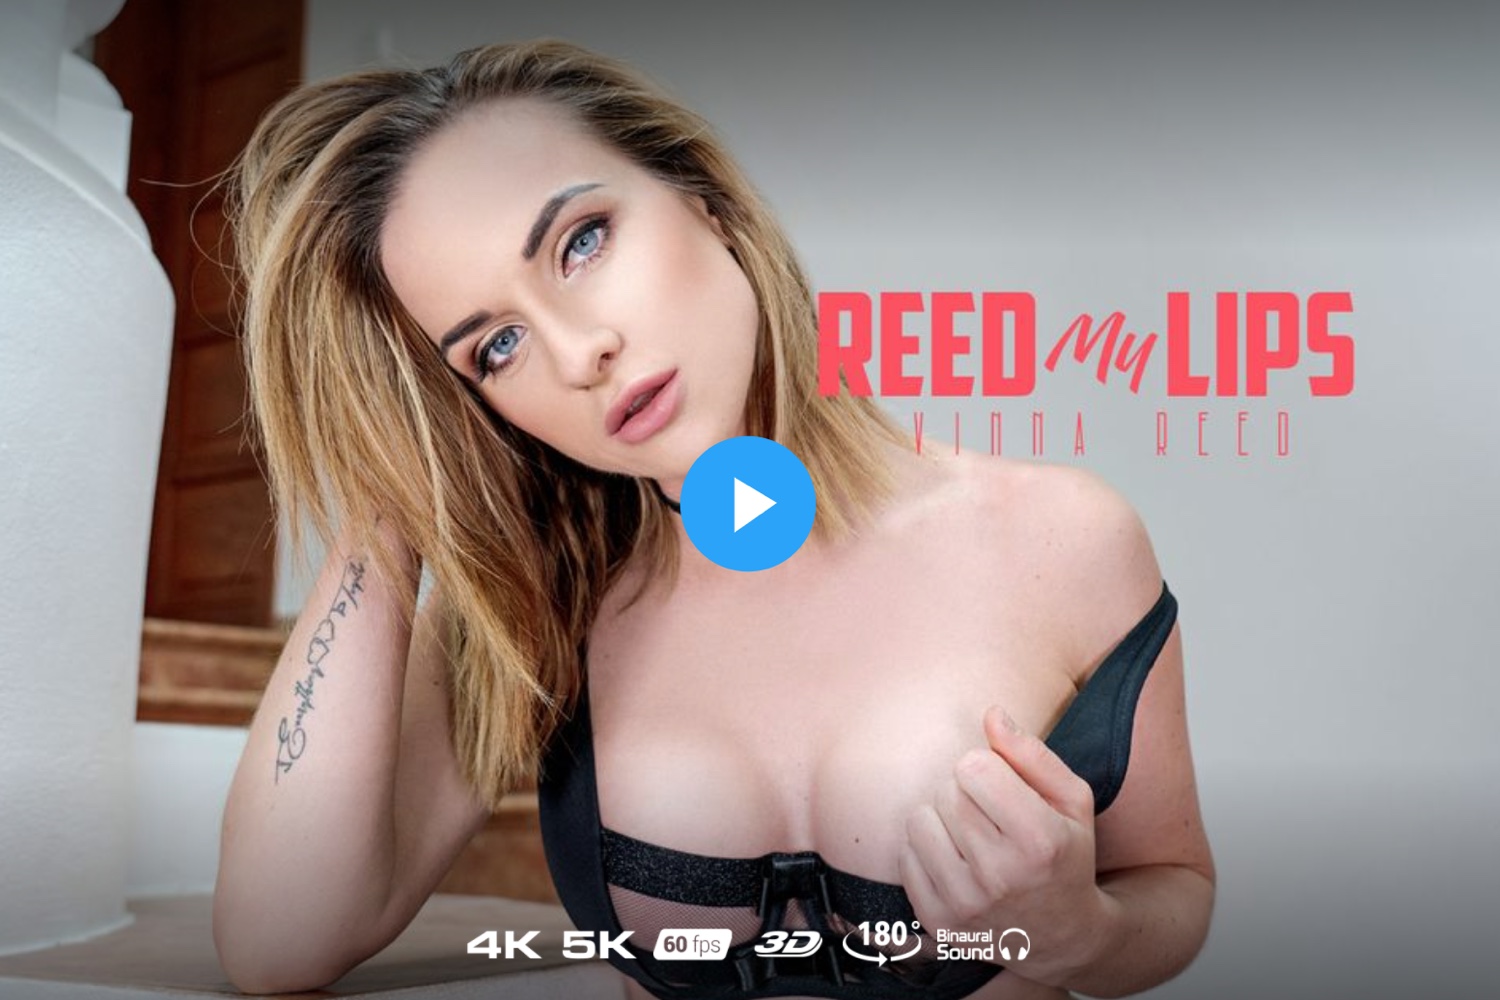 Reed My Lips - Vinna Reed VR Porn - Vinna Reed Virtual Reality Porn